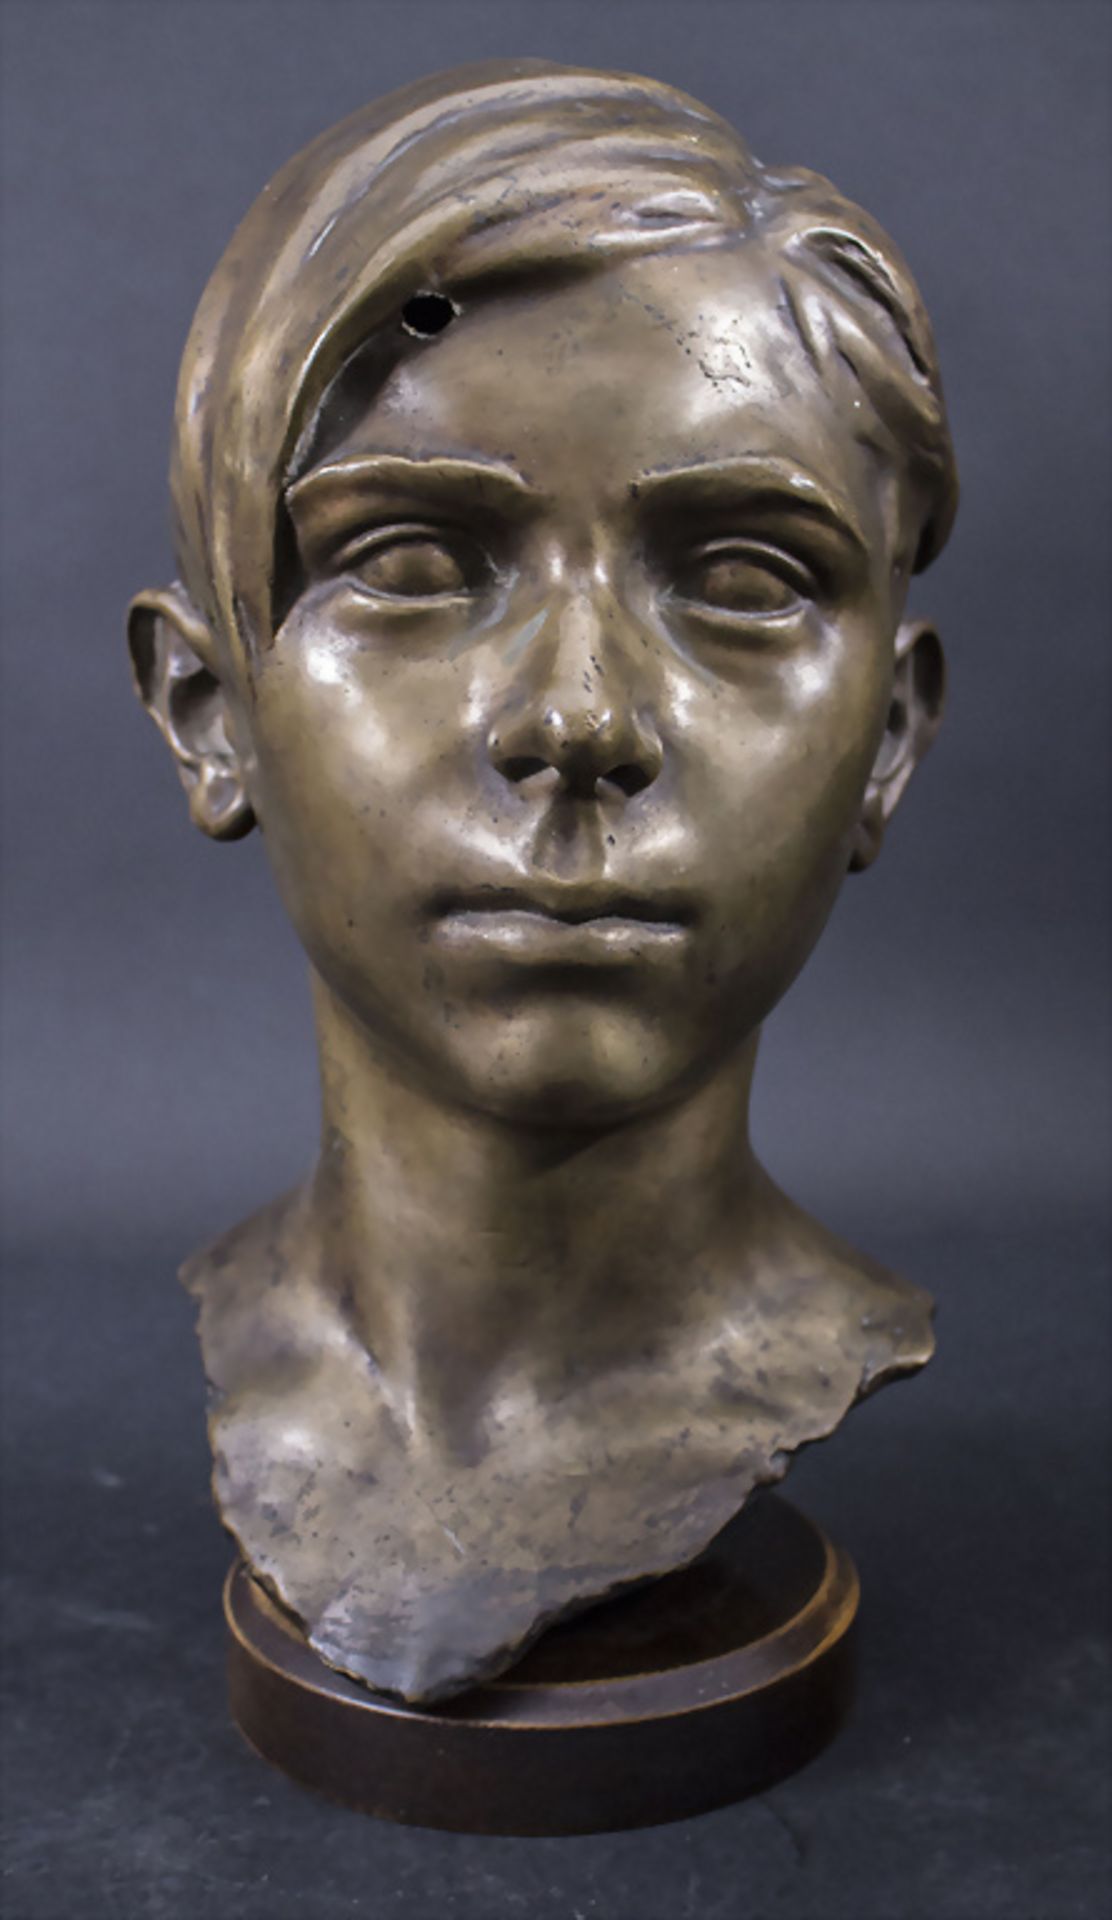 Bronzeplastik 'Knabe' / An Art Nouveau bronze sculpture of a young boy, Francois Vanczak, 1932